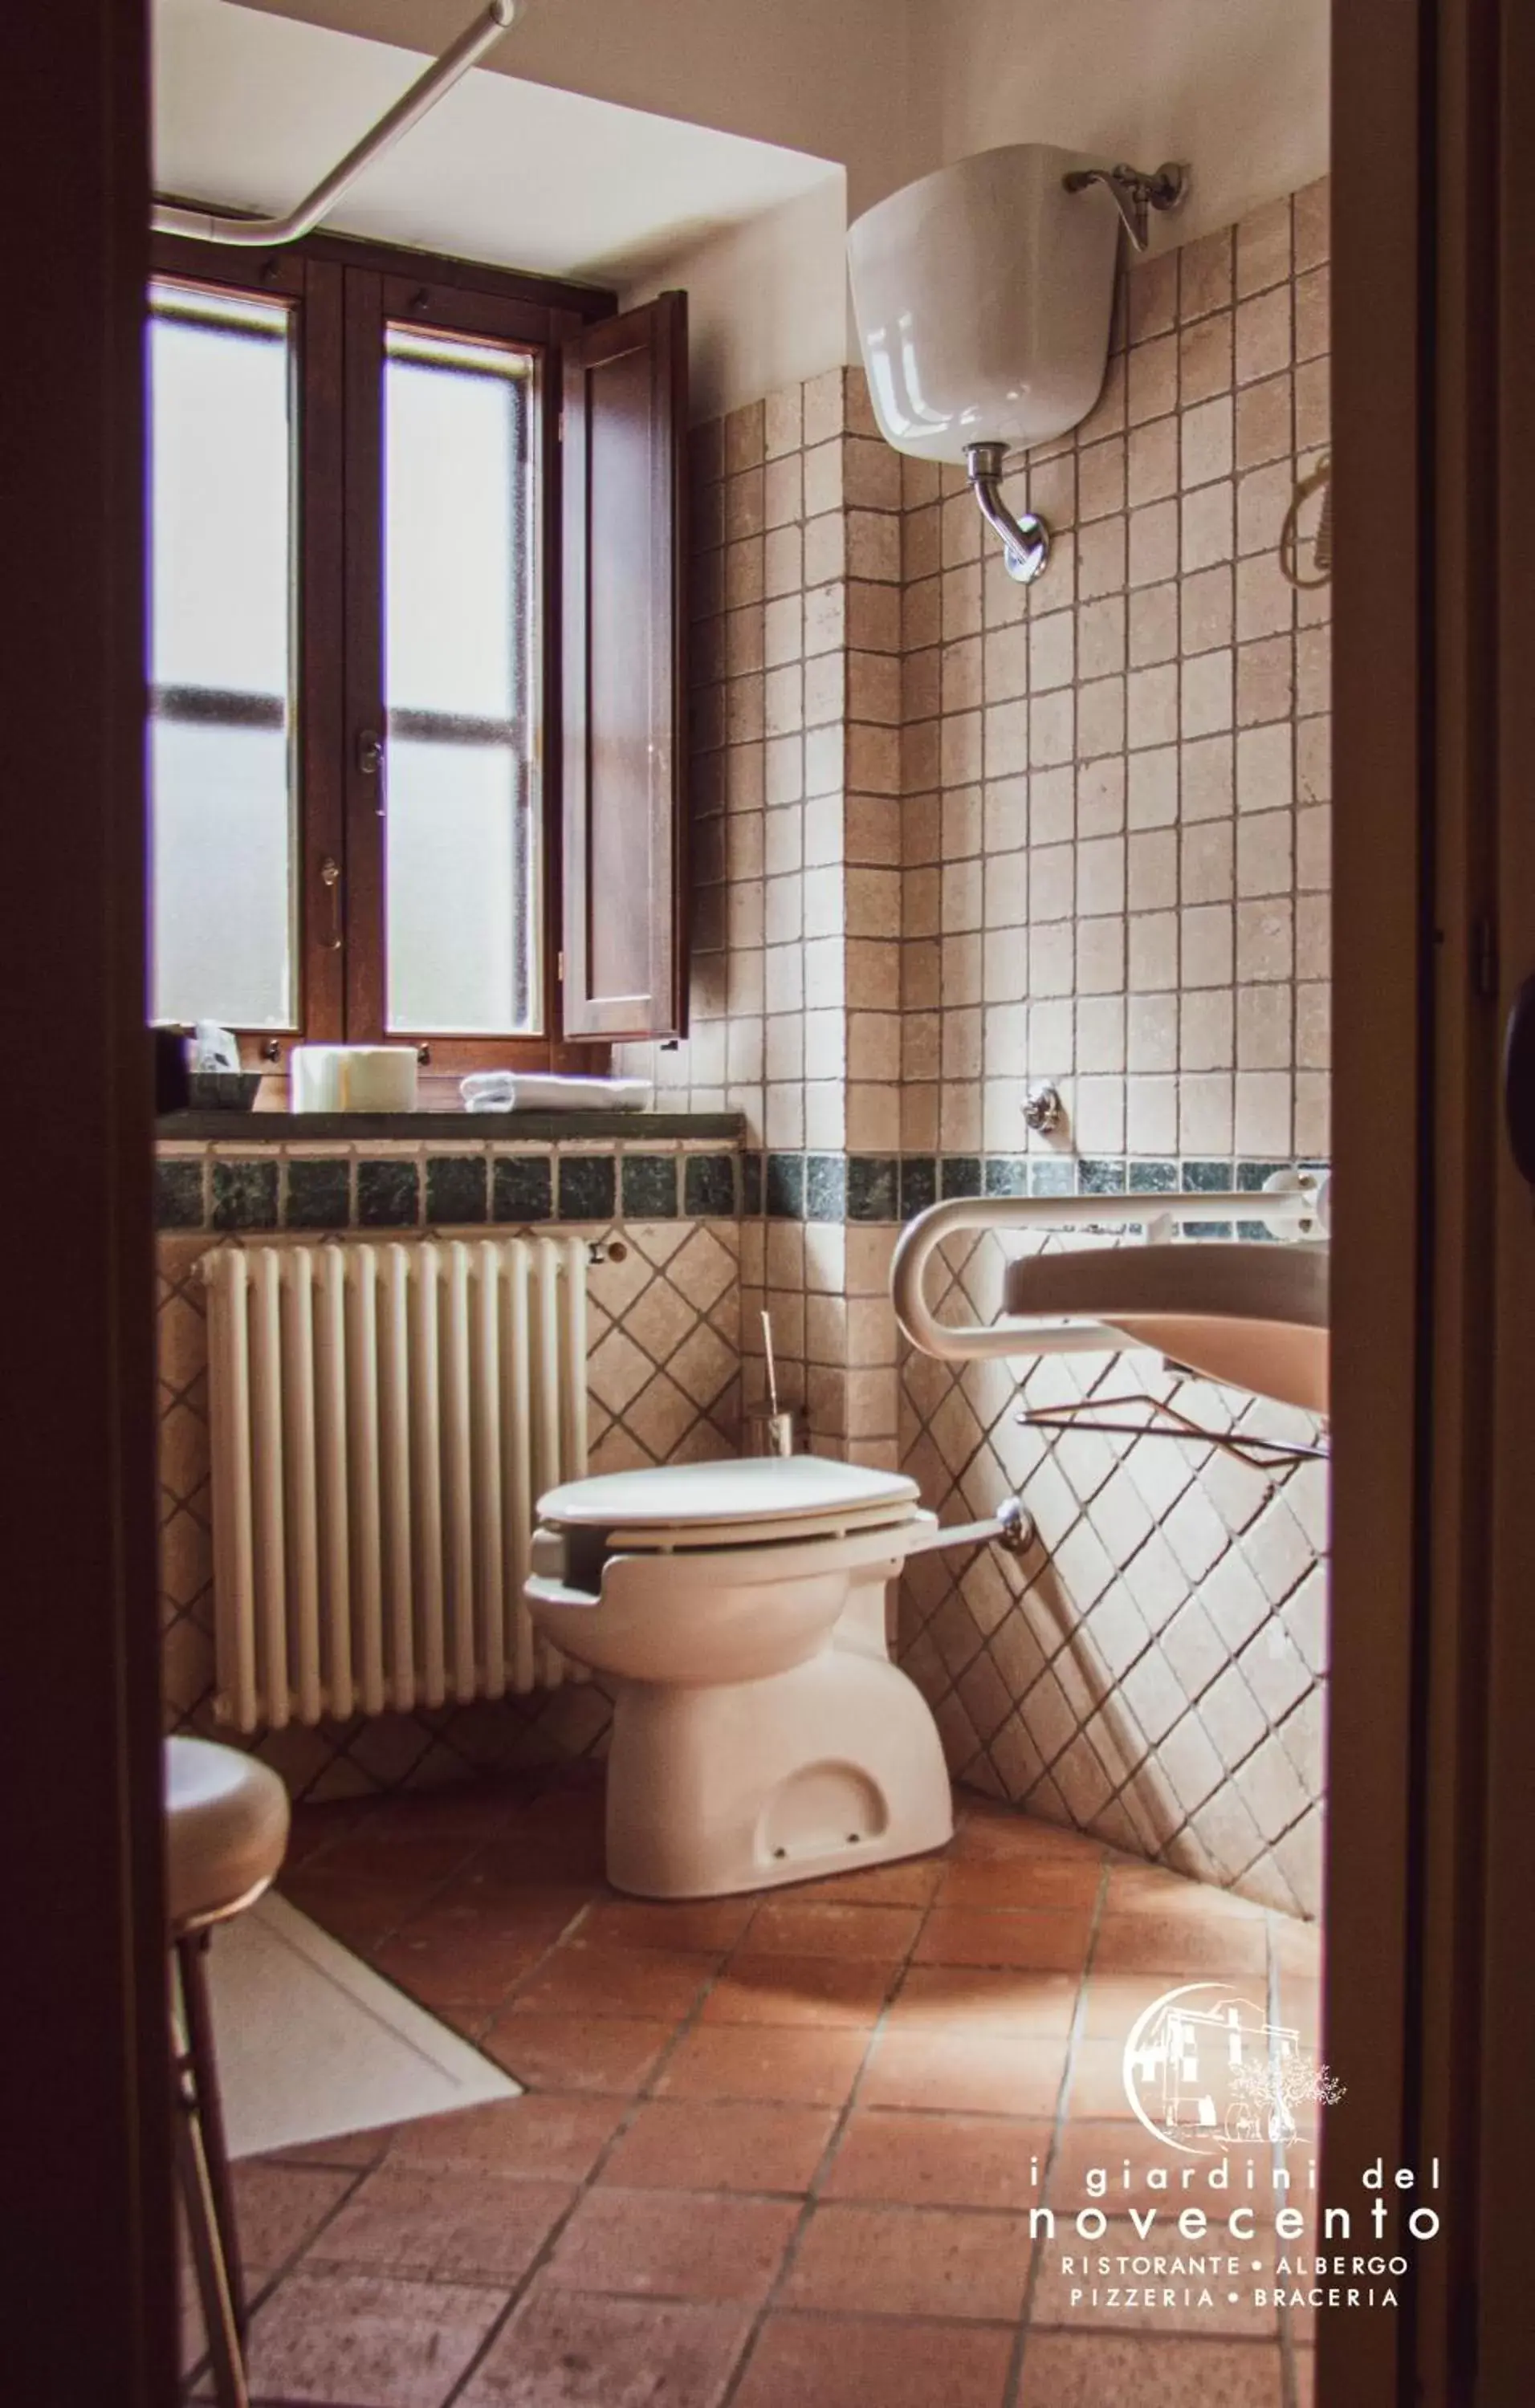 Bathroom in giardini del Novecento